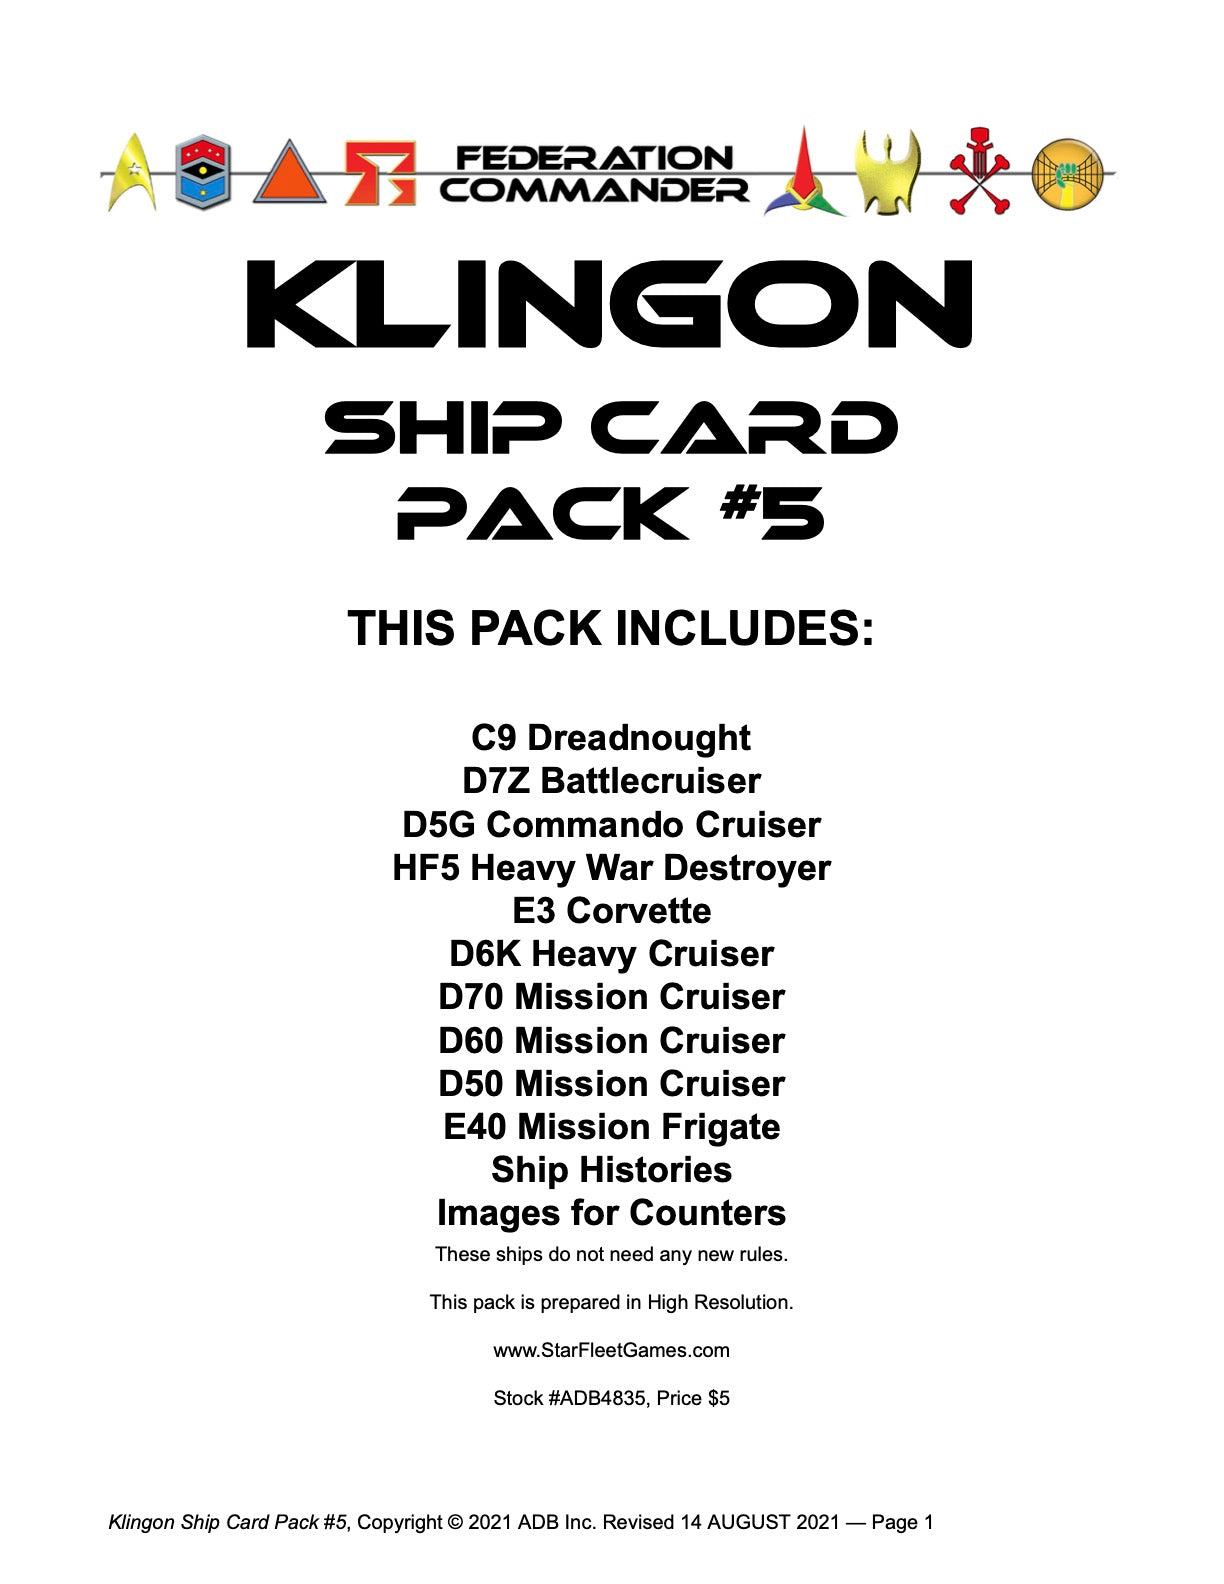 Federation Commander: Klingon Ship Card Pack #5